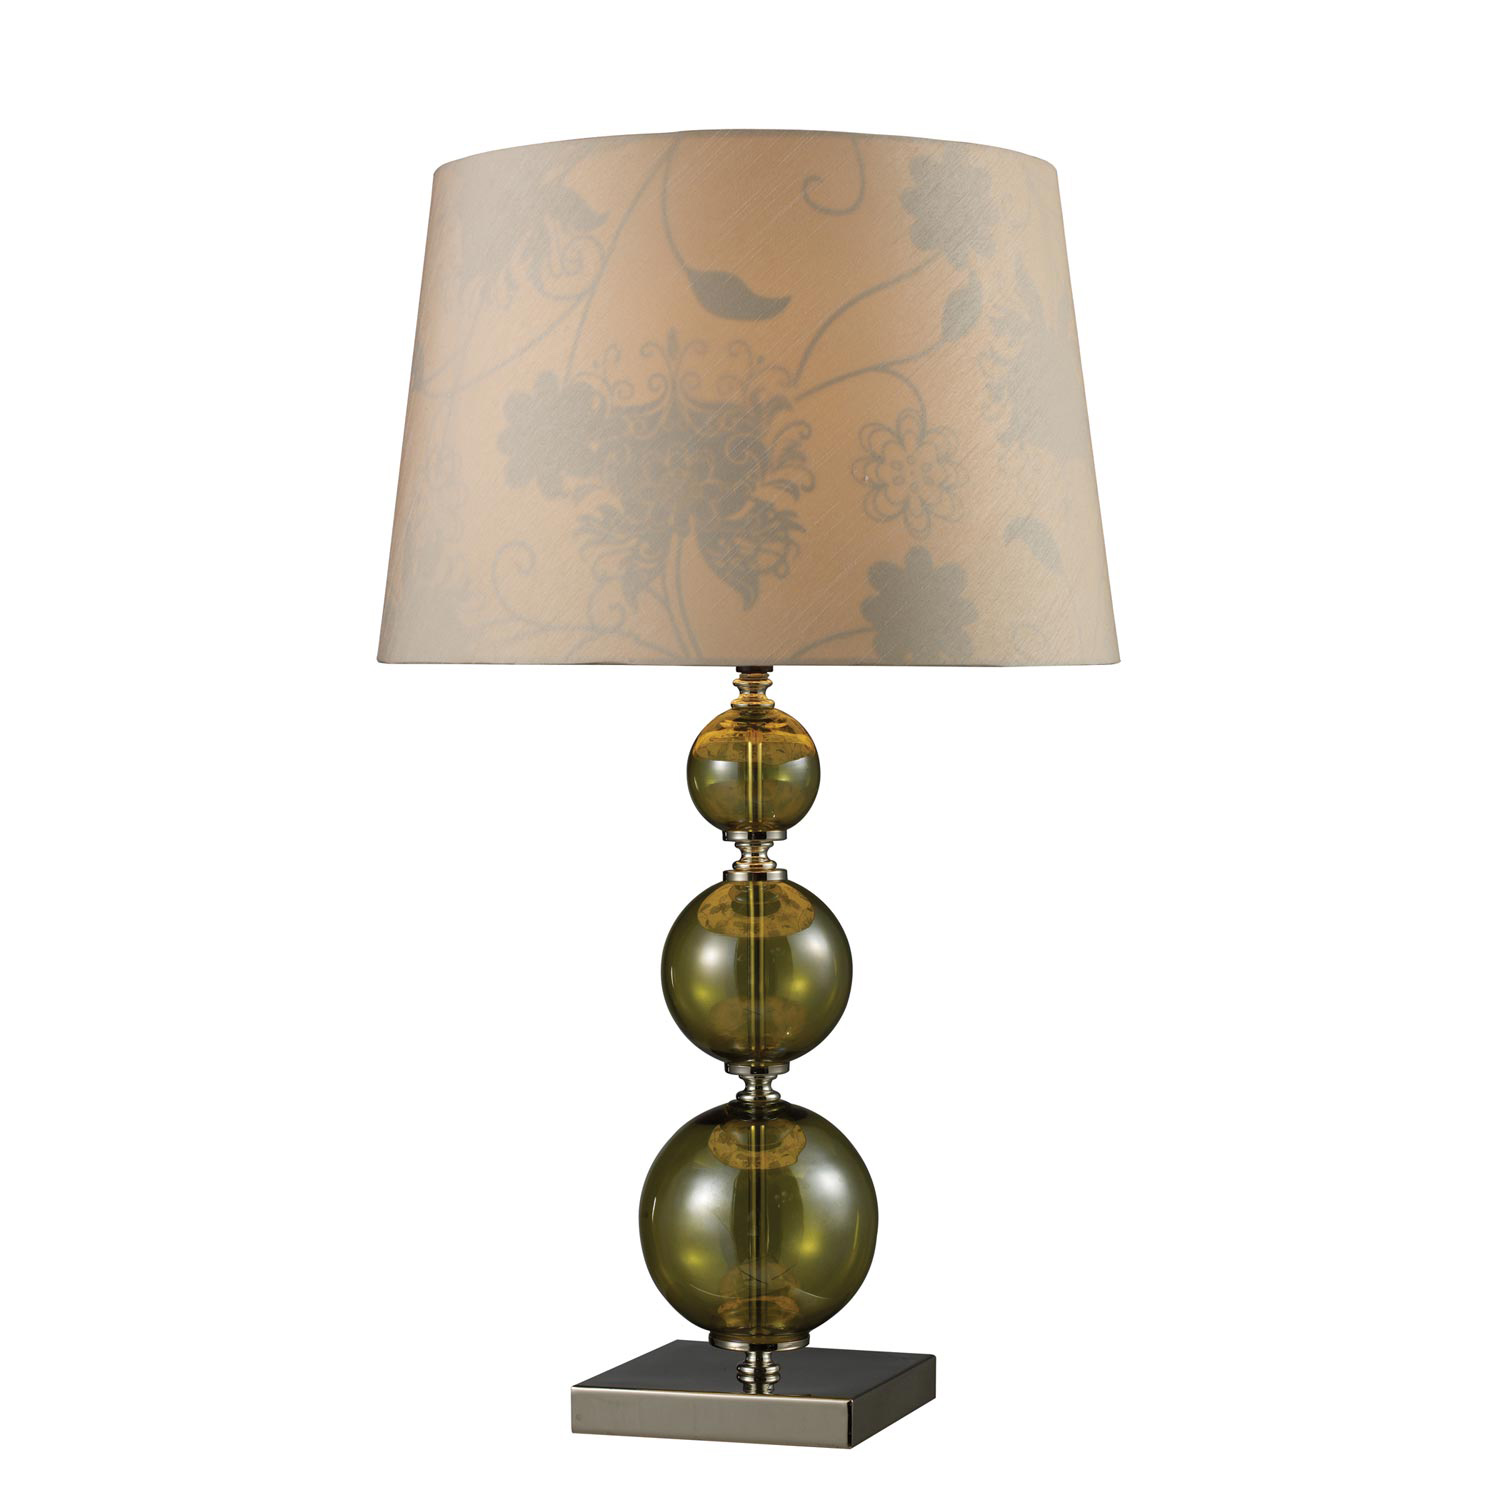 Elk Lighting D1611 Sharon Hill Table Lamp - Vivi Green and Polished Nickel